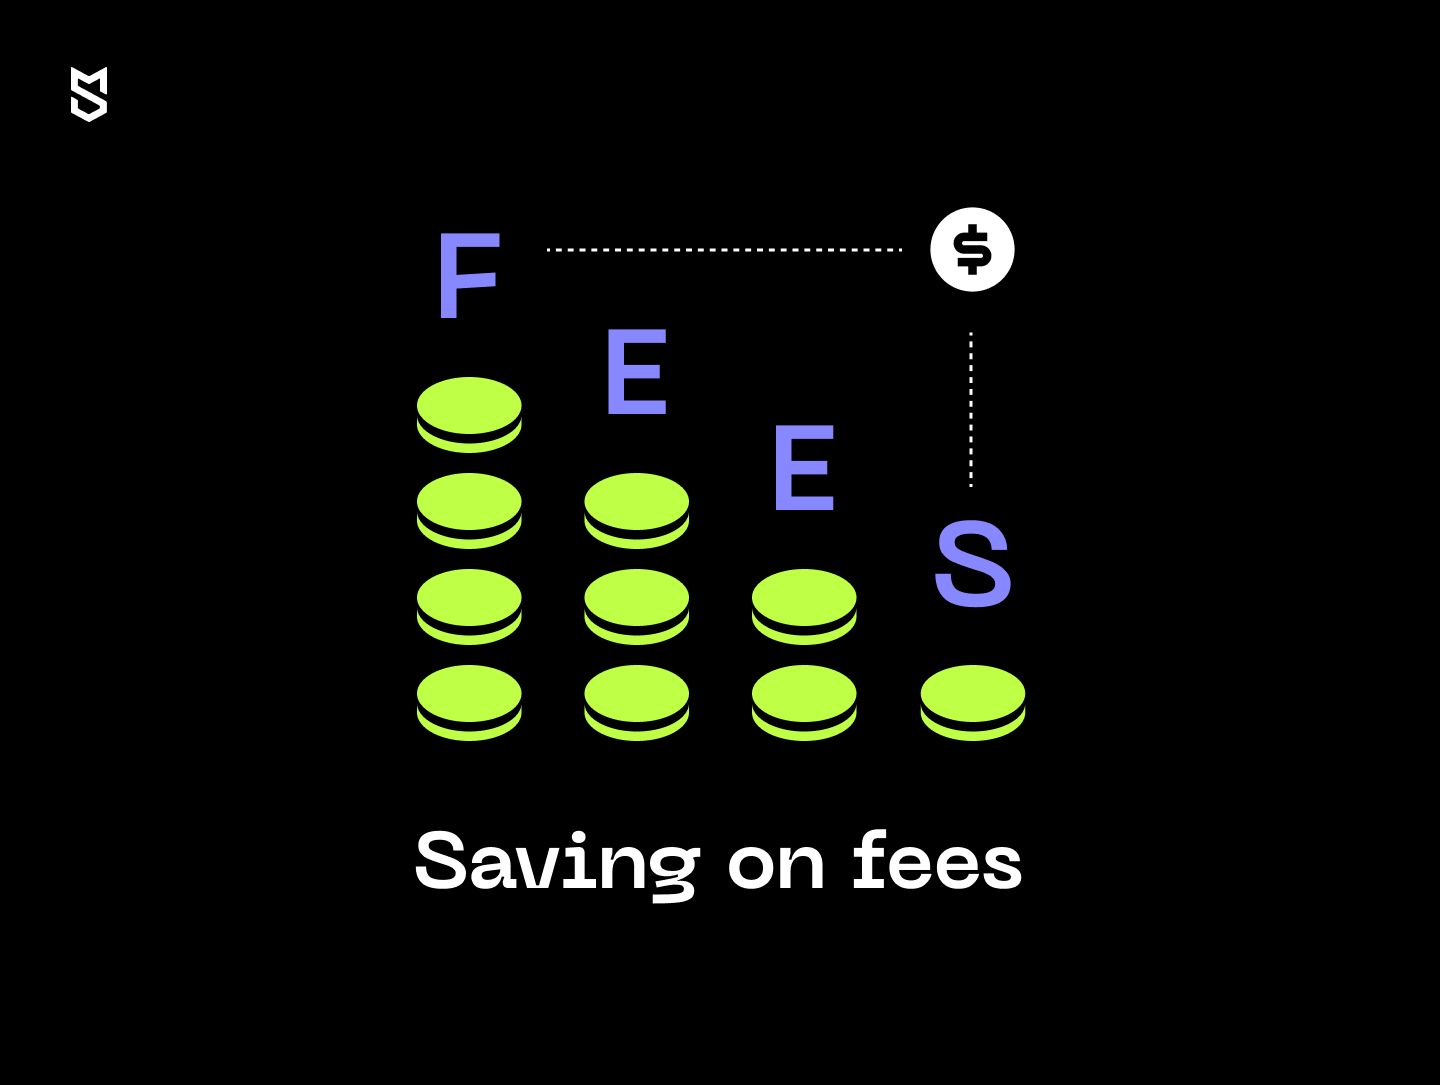 Saving on fees